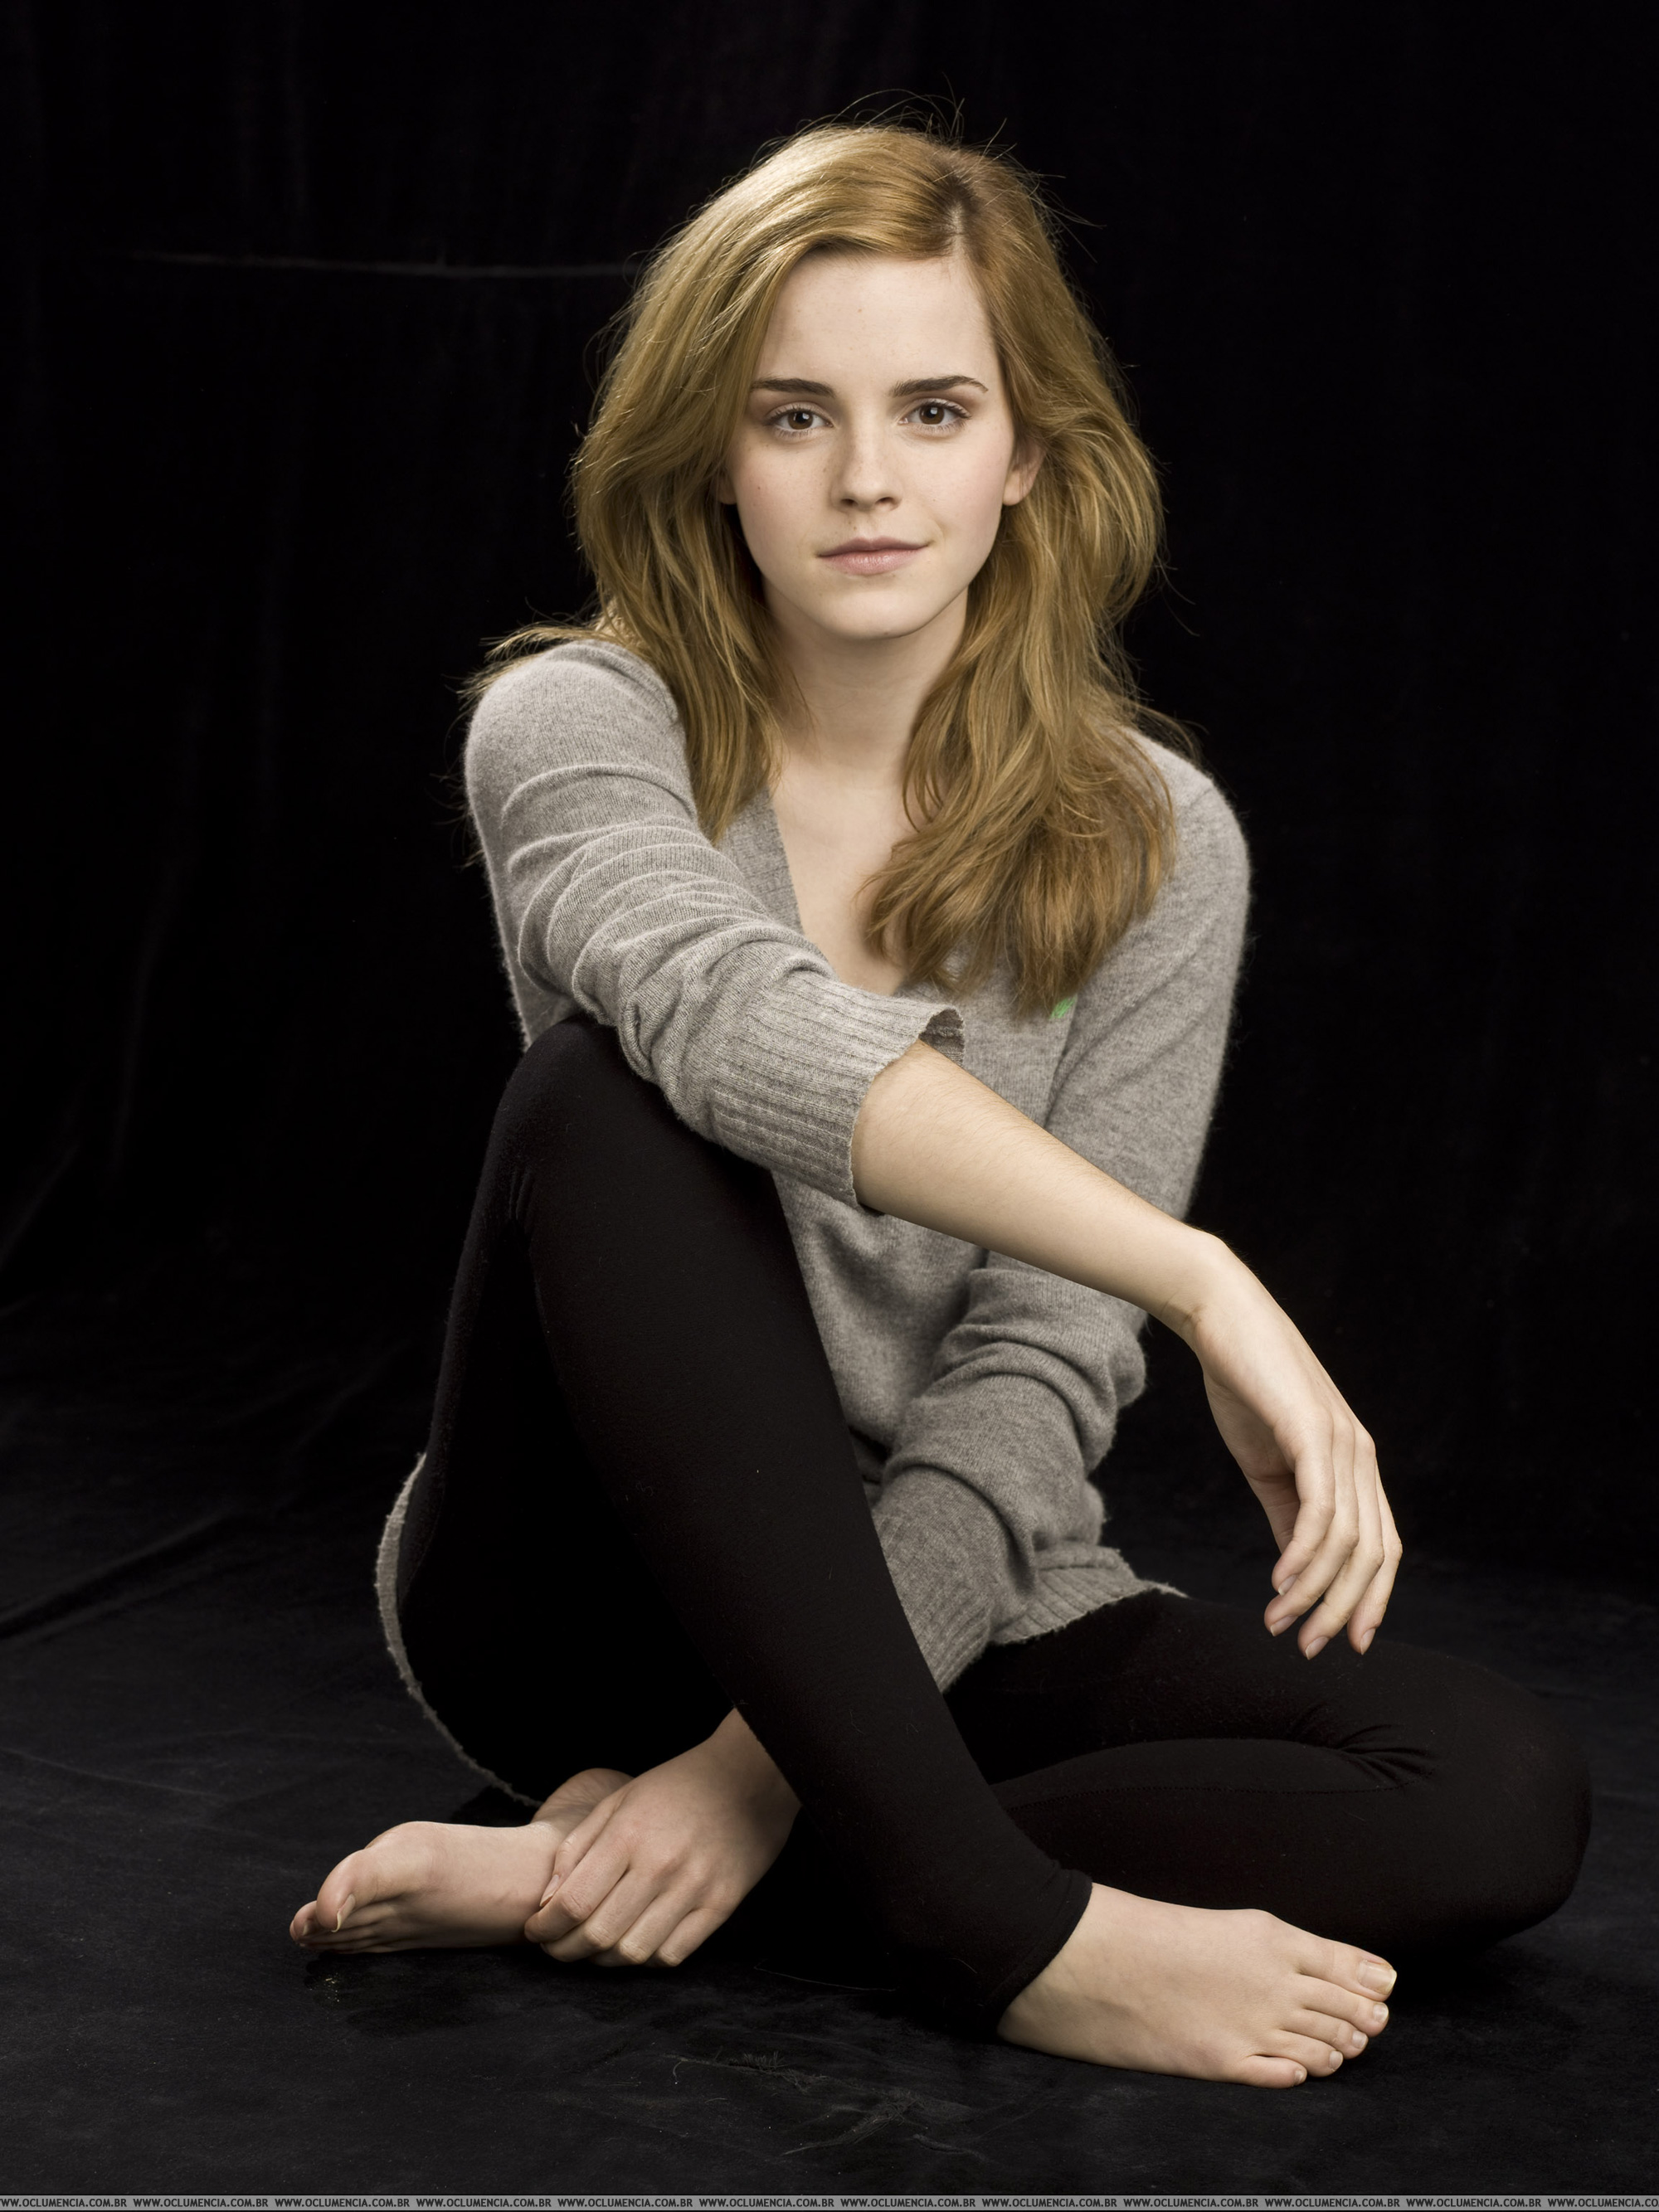 Emma Watson Hot Wallpaper | Wallpapers, Backgrounds, Images, Art ...